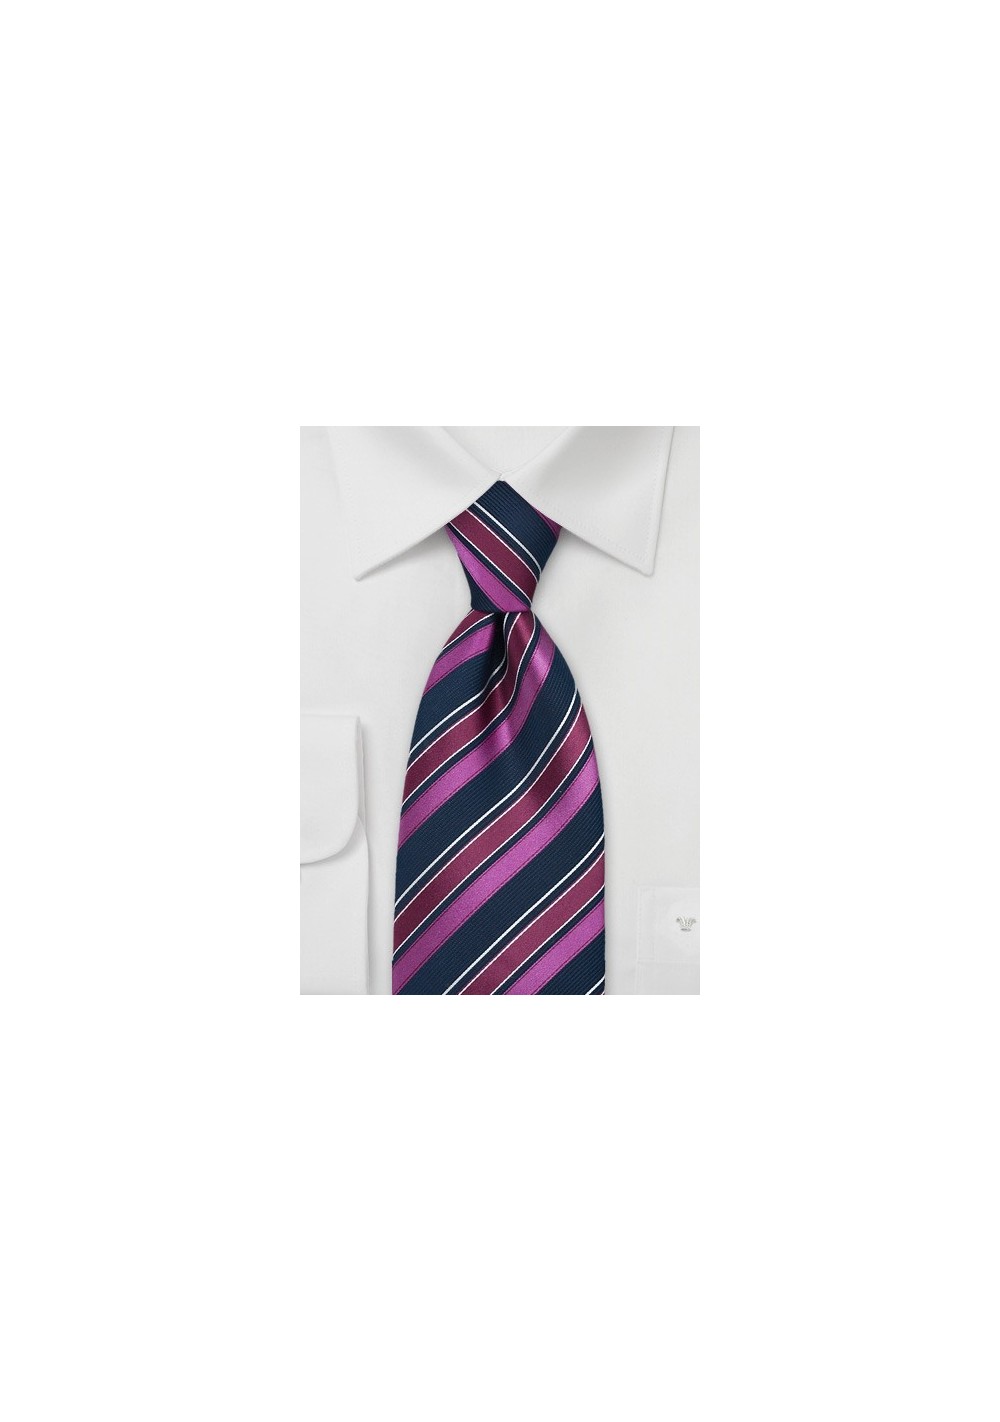 Fuschia and Navy Striped Tie